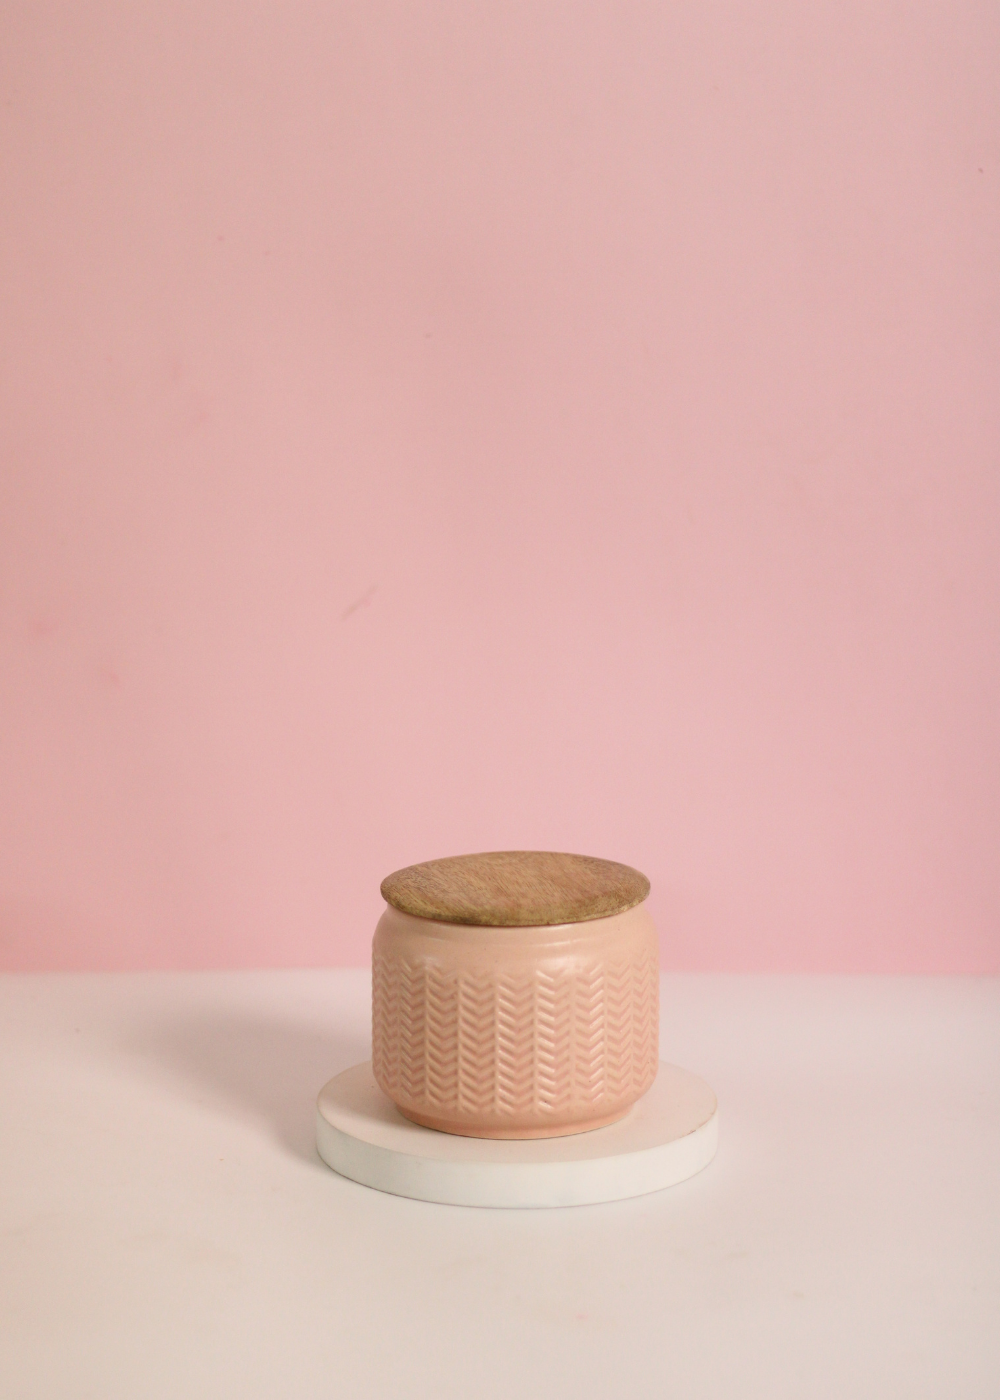 Pink Airtight Storage Jar - Small